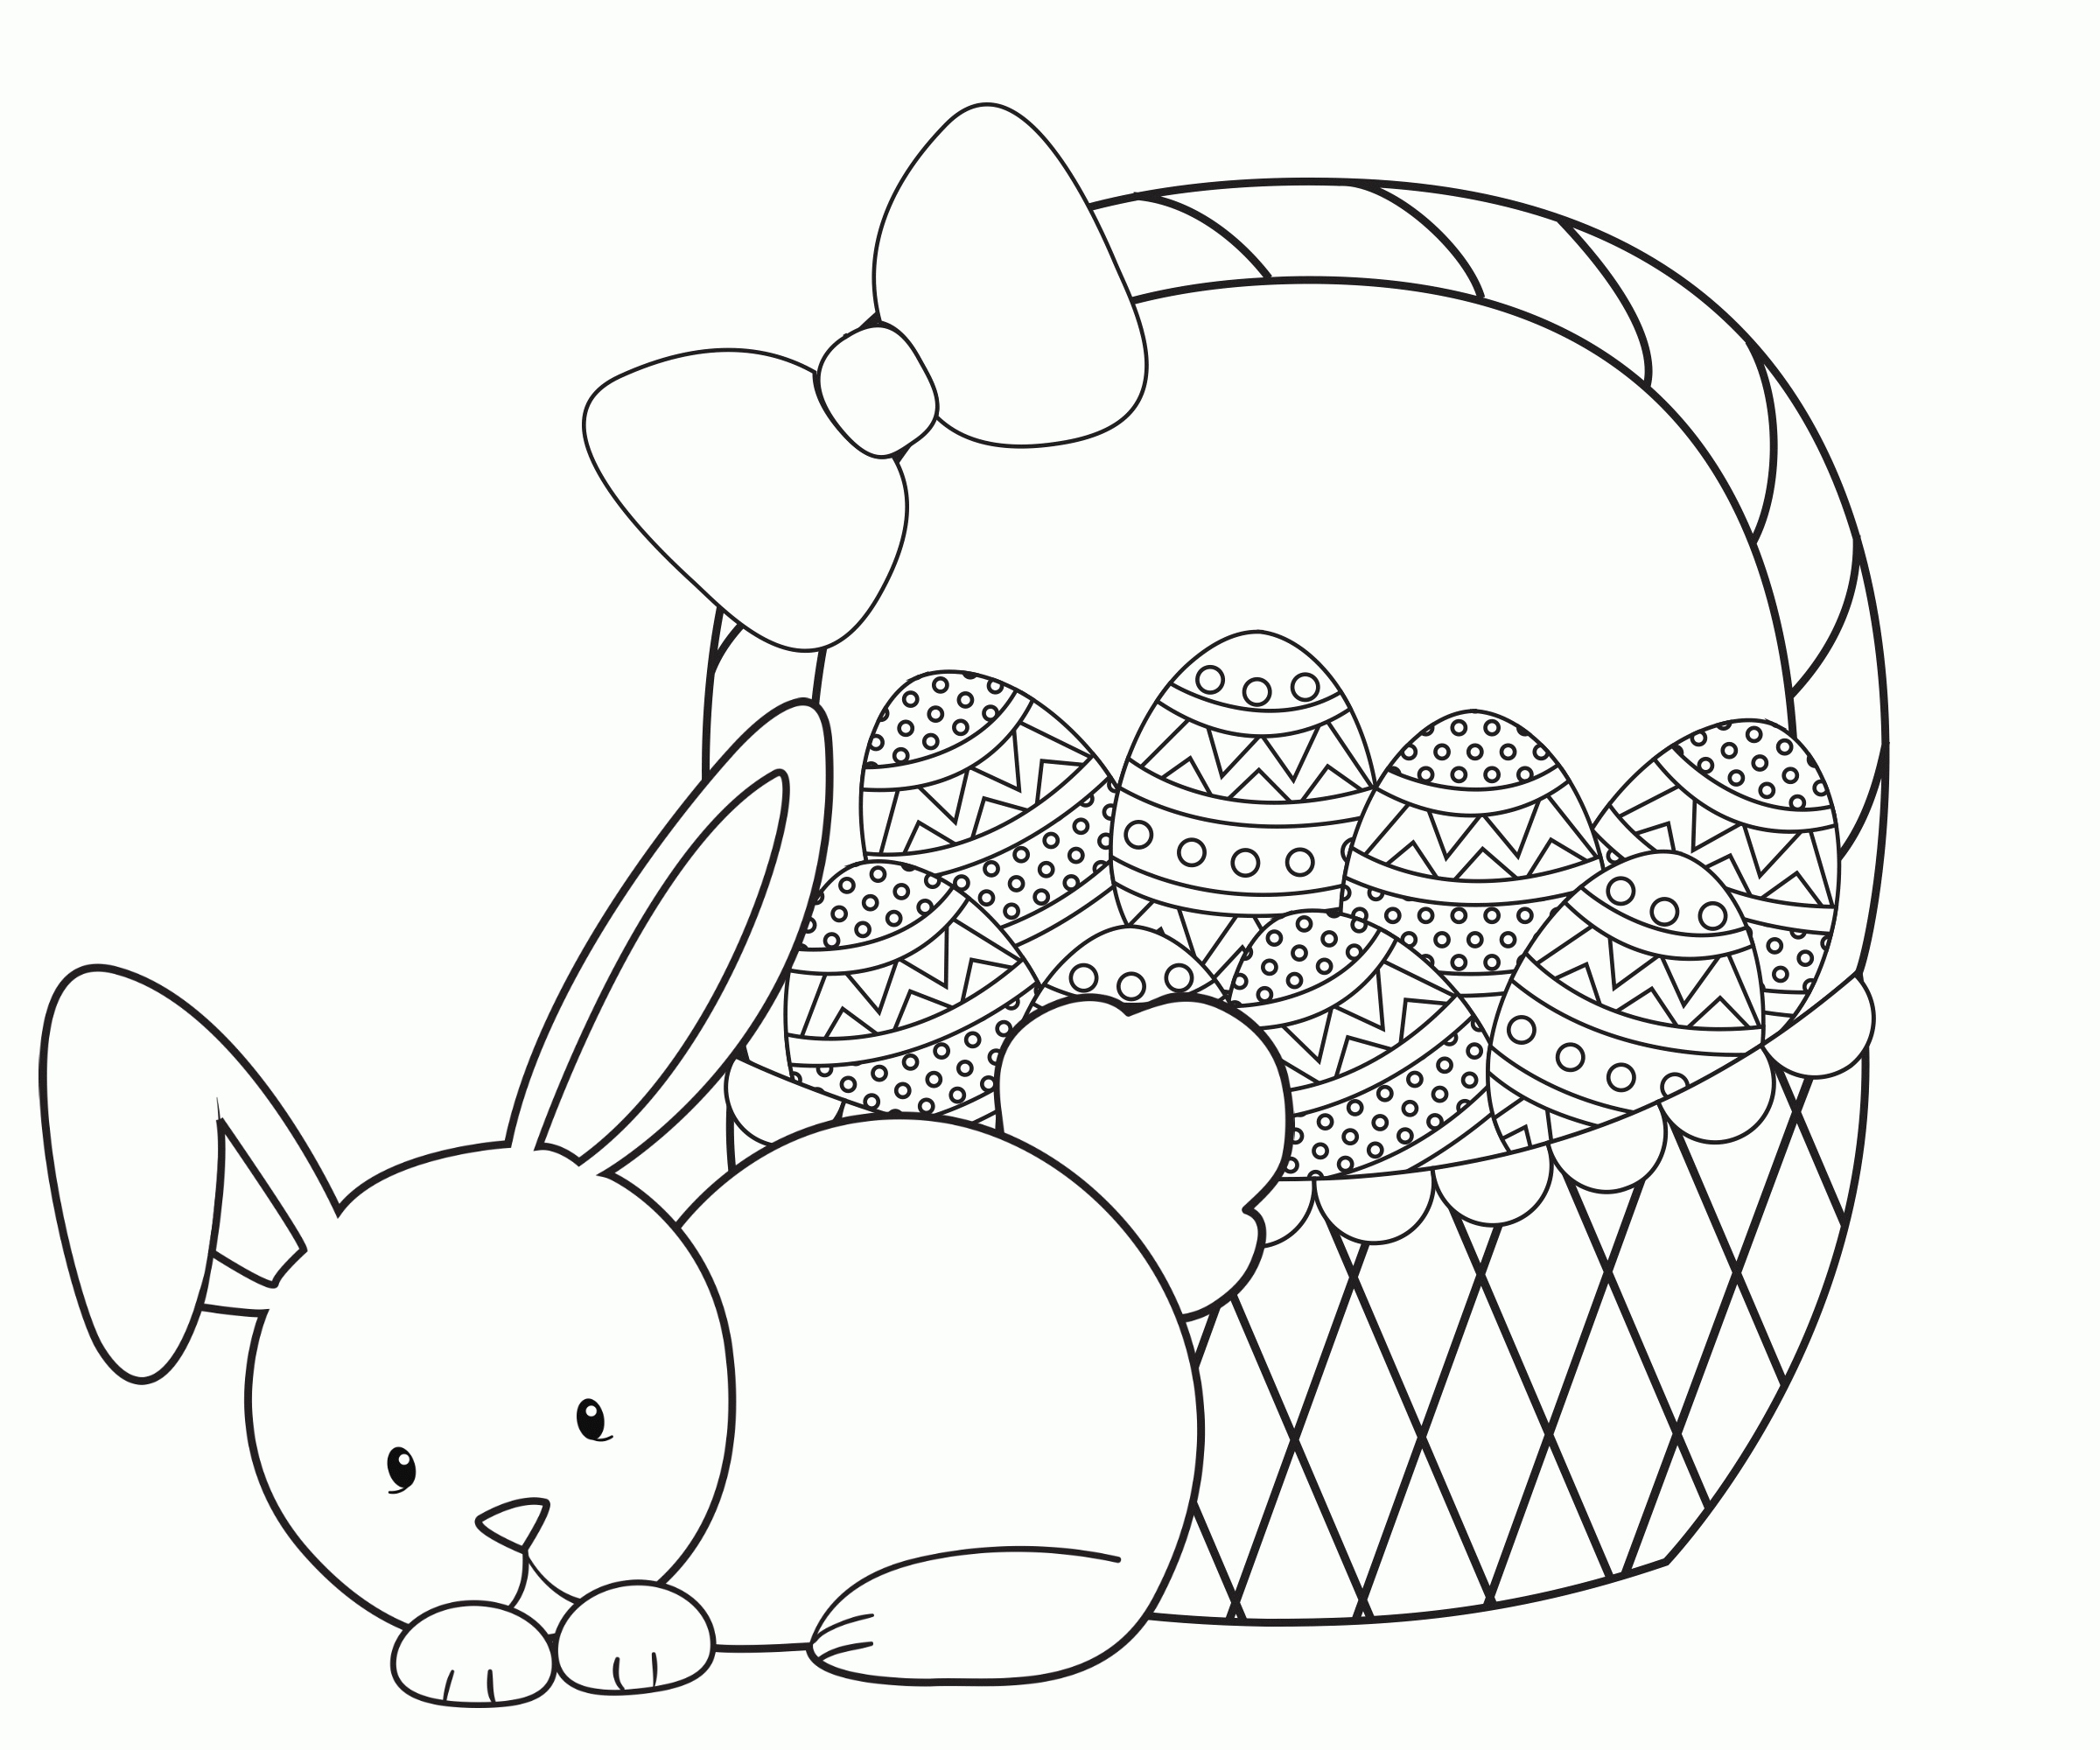 Download Easter Basket Printable Coloring Pages at GetDrawings.com ...